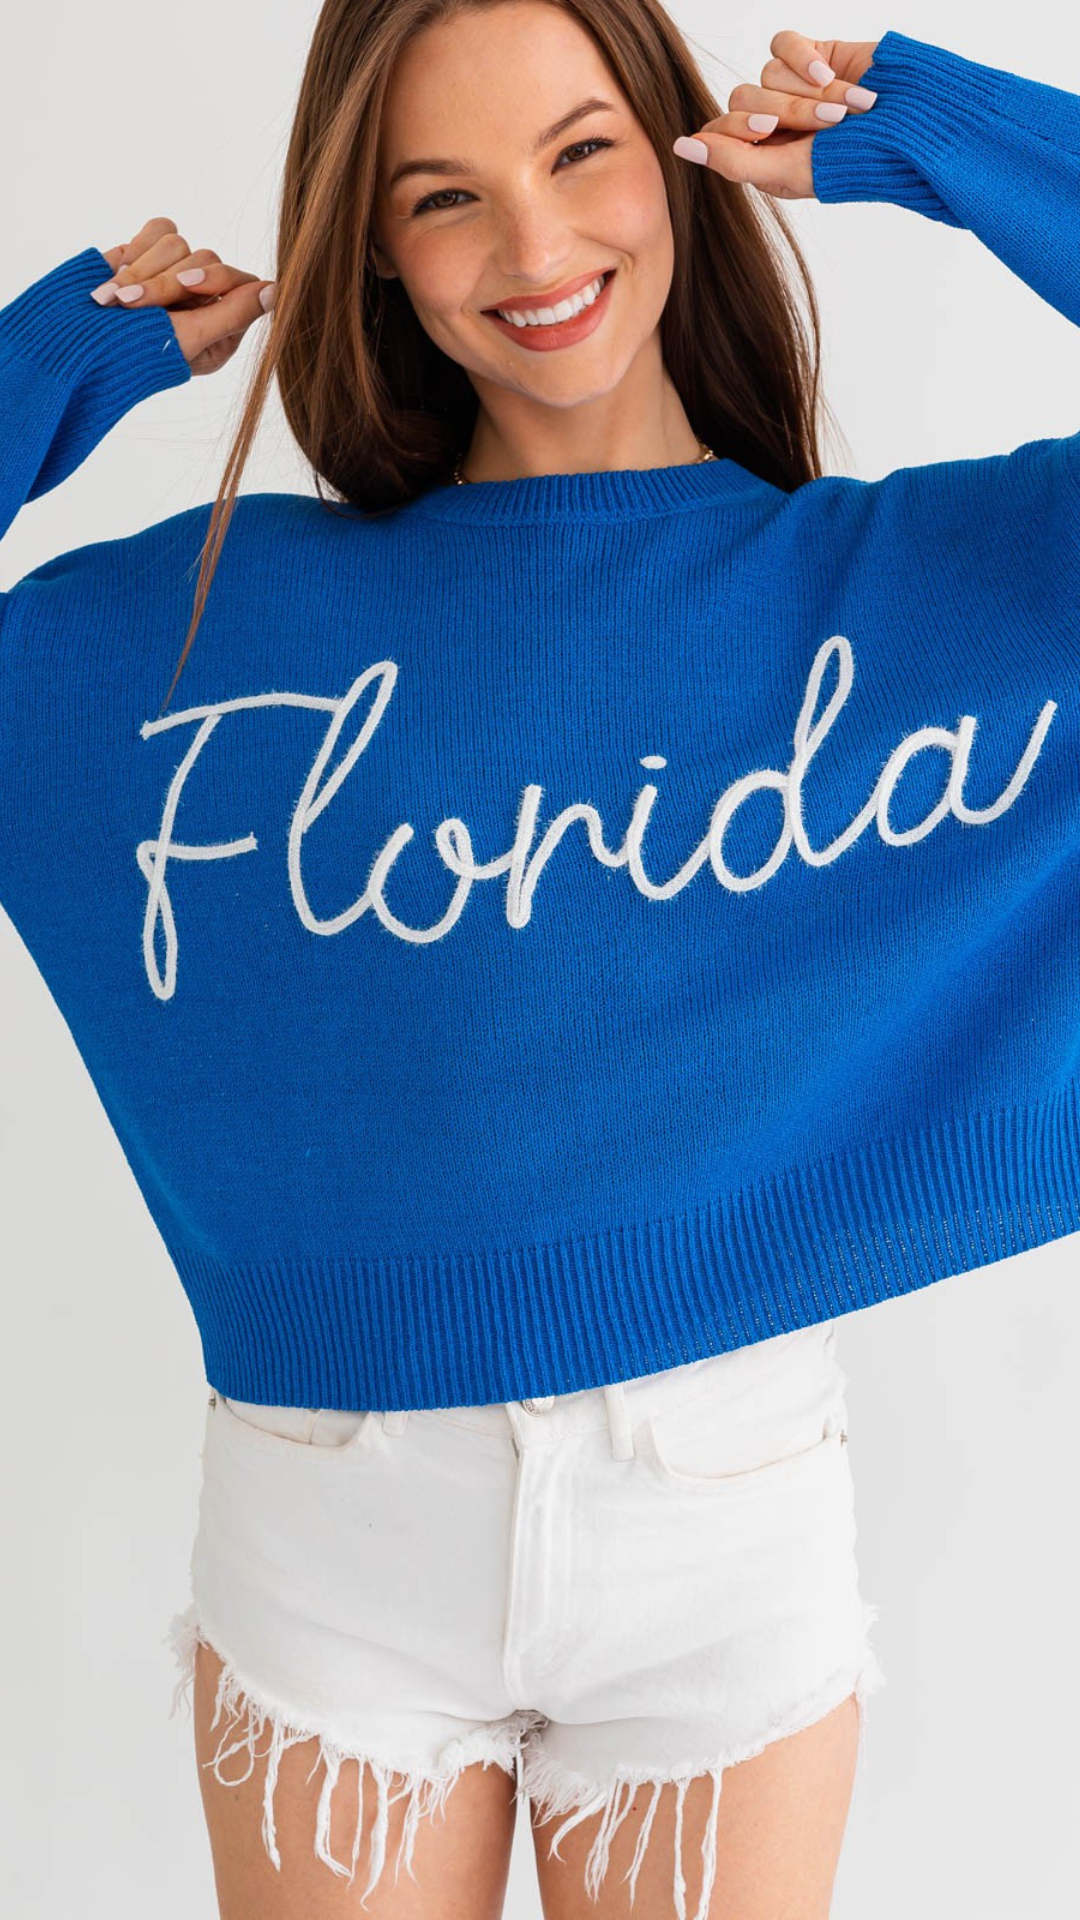 Florida Sweater